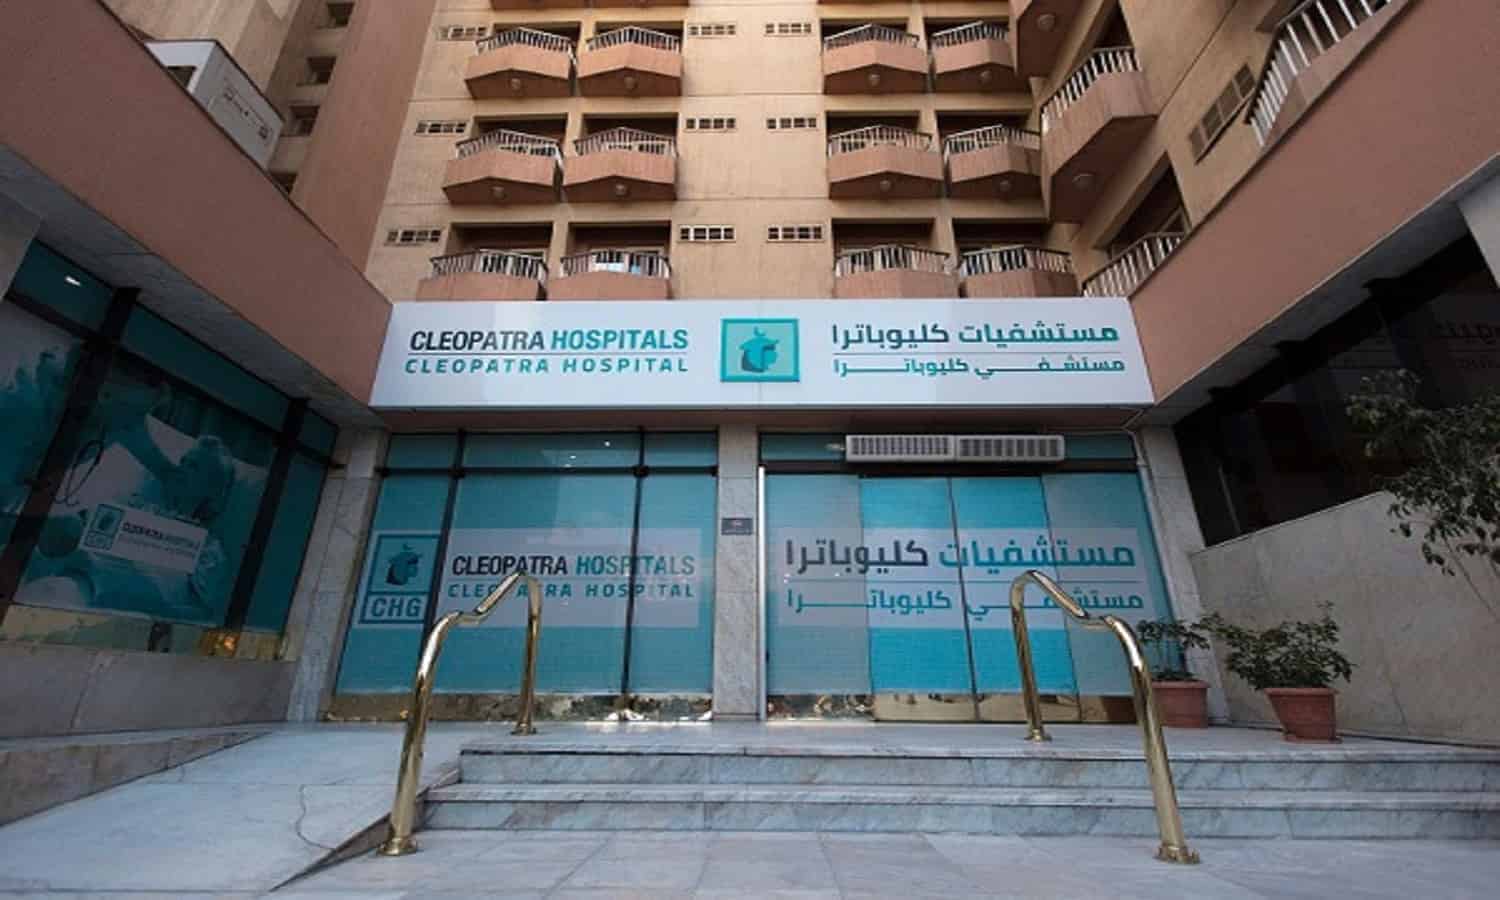 Cleopatra Hospital, Fawaz Al Hokair partner to open healthcare facility in Riyadh

